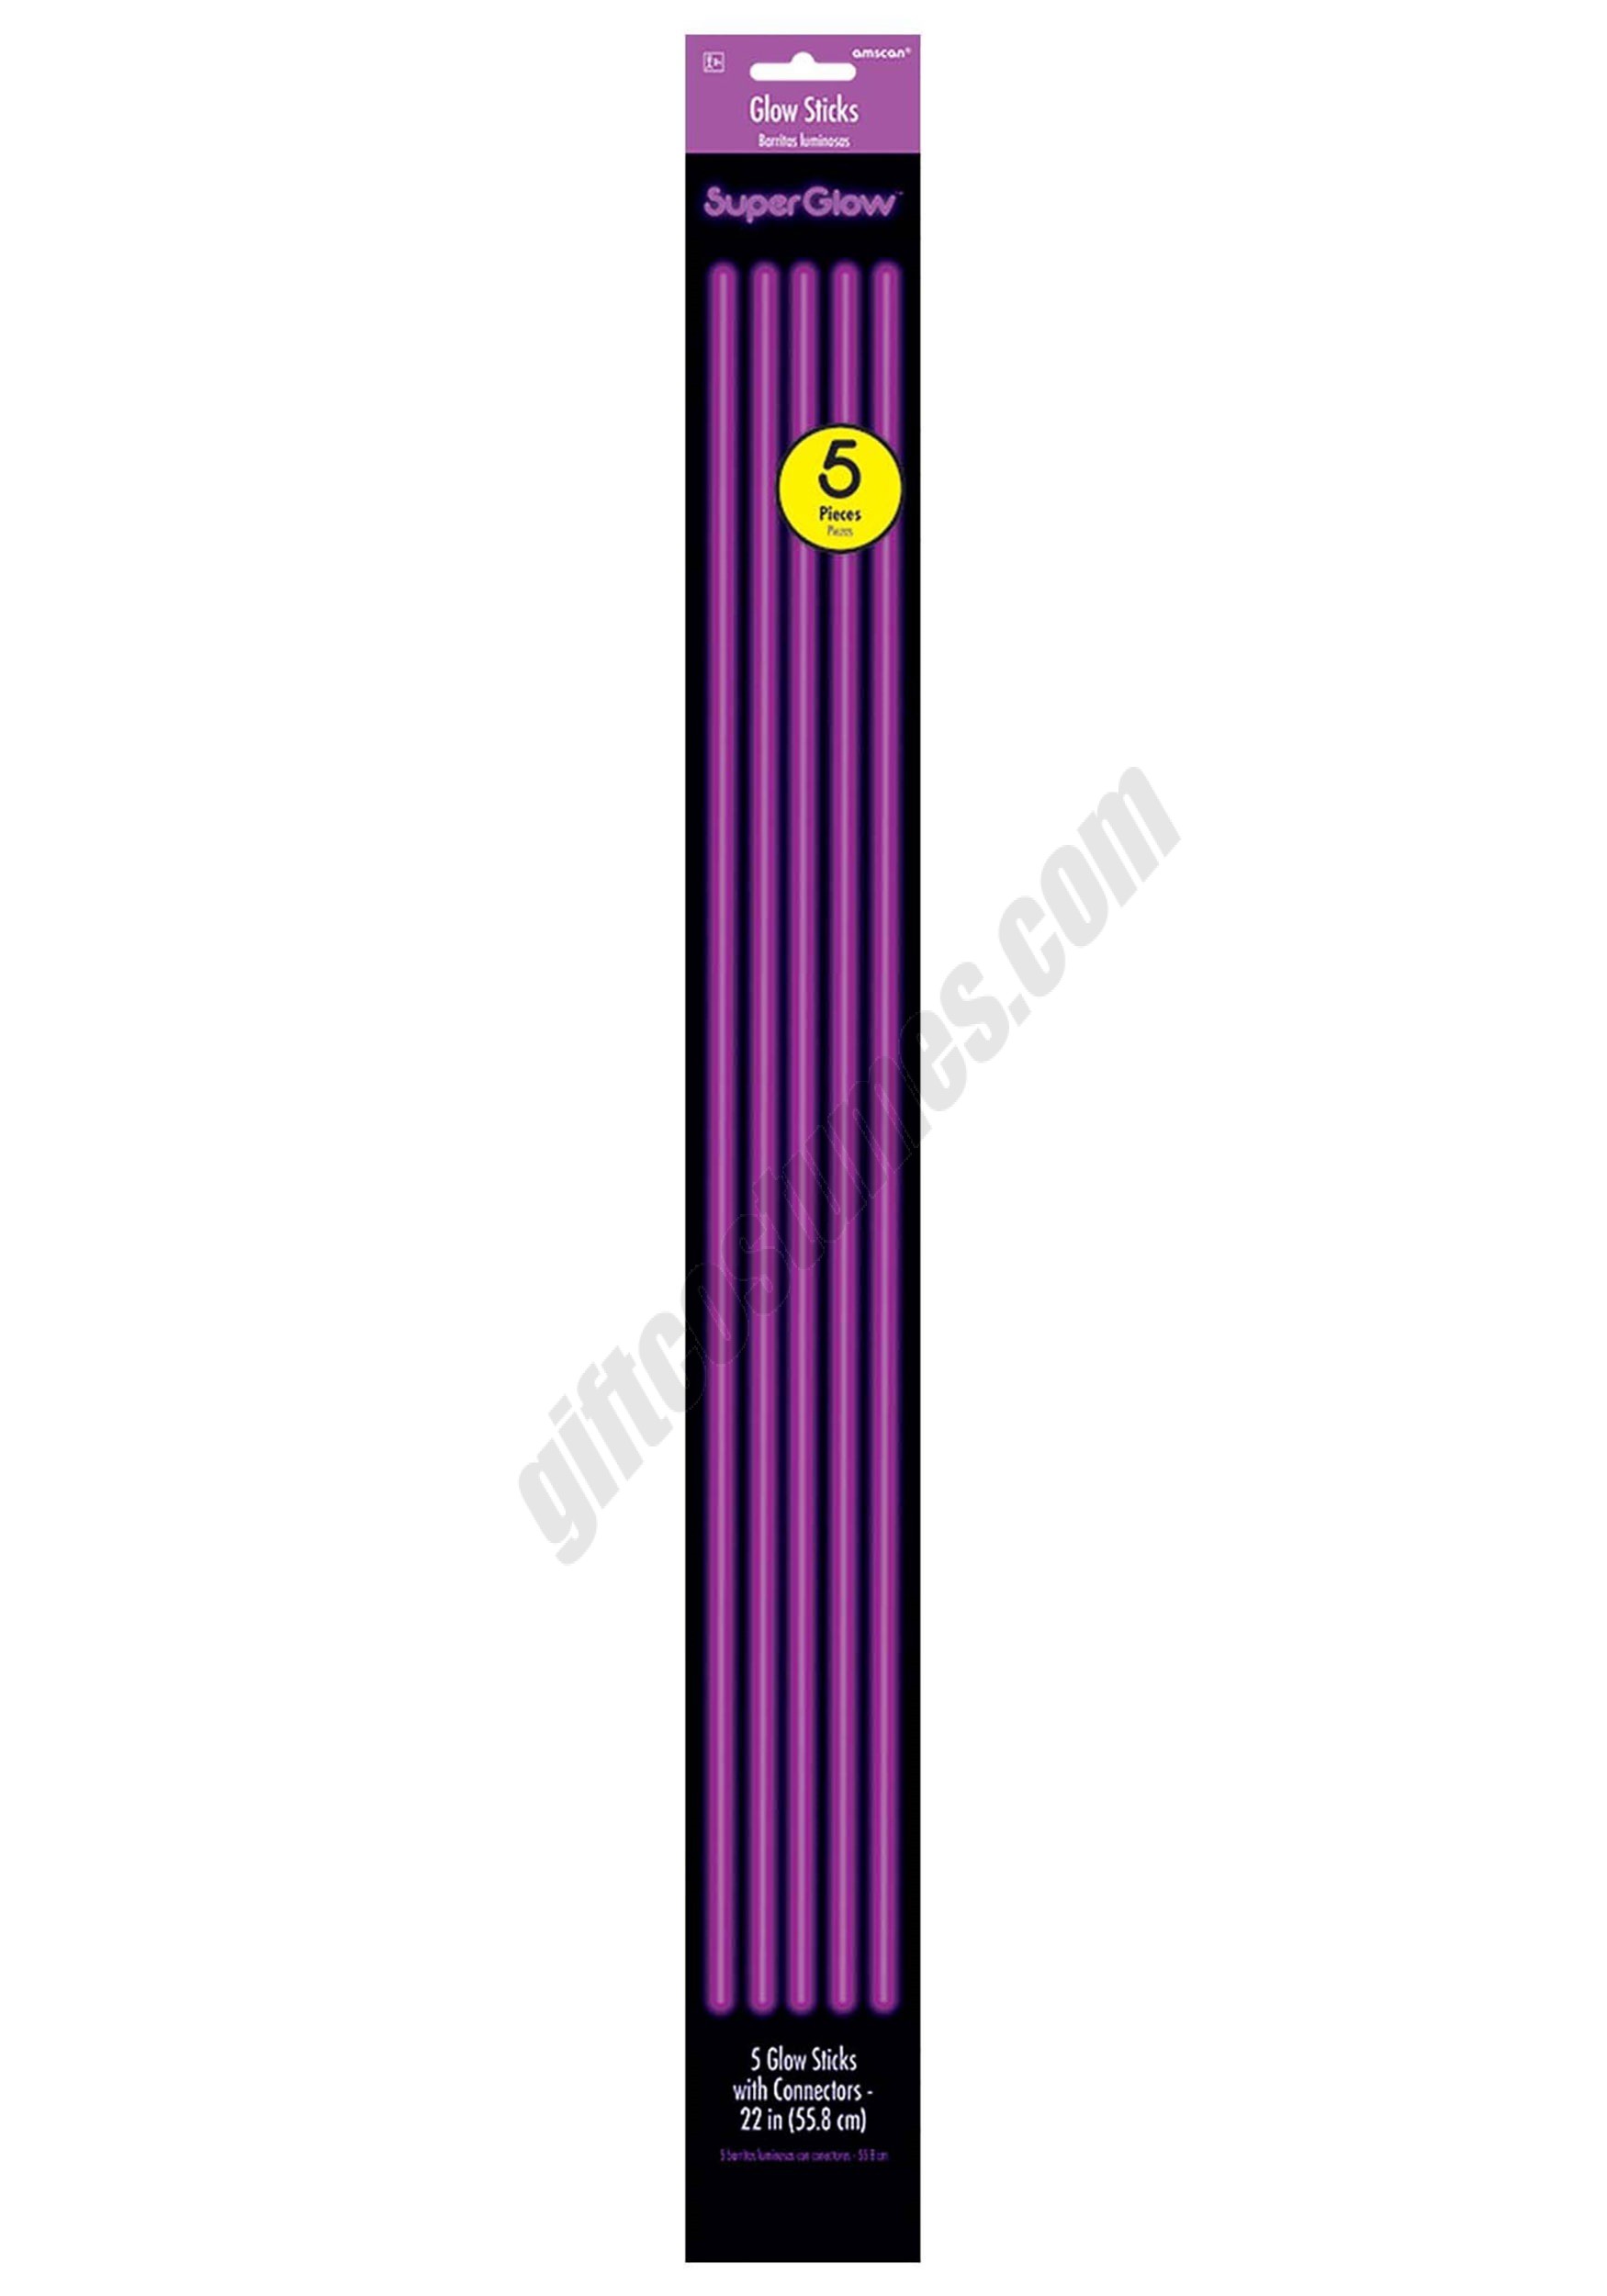 22" Purple Glowsticks Pack of 5 Promotions - 22" Purple Glowsticks Pack of 5 Promotions